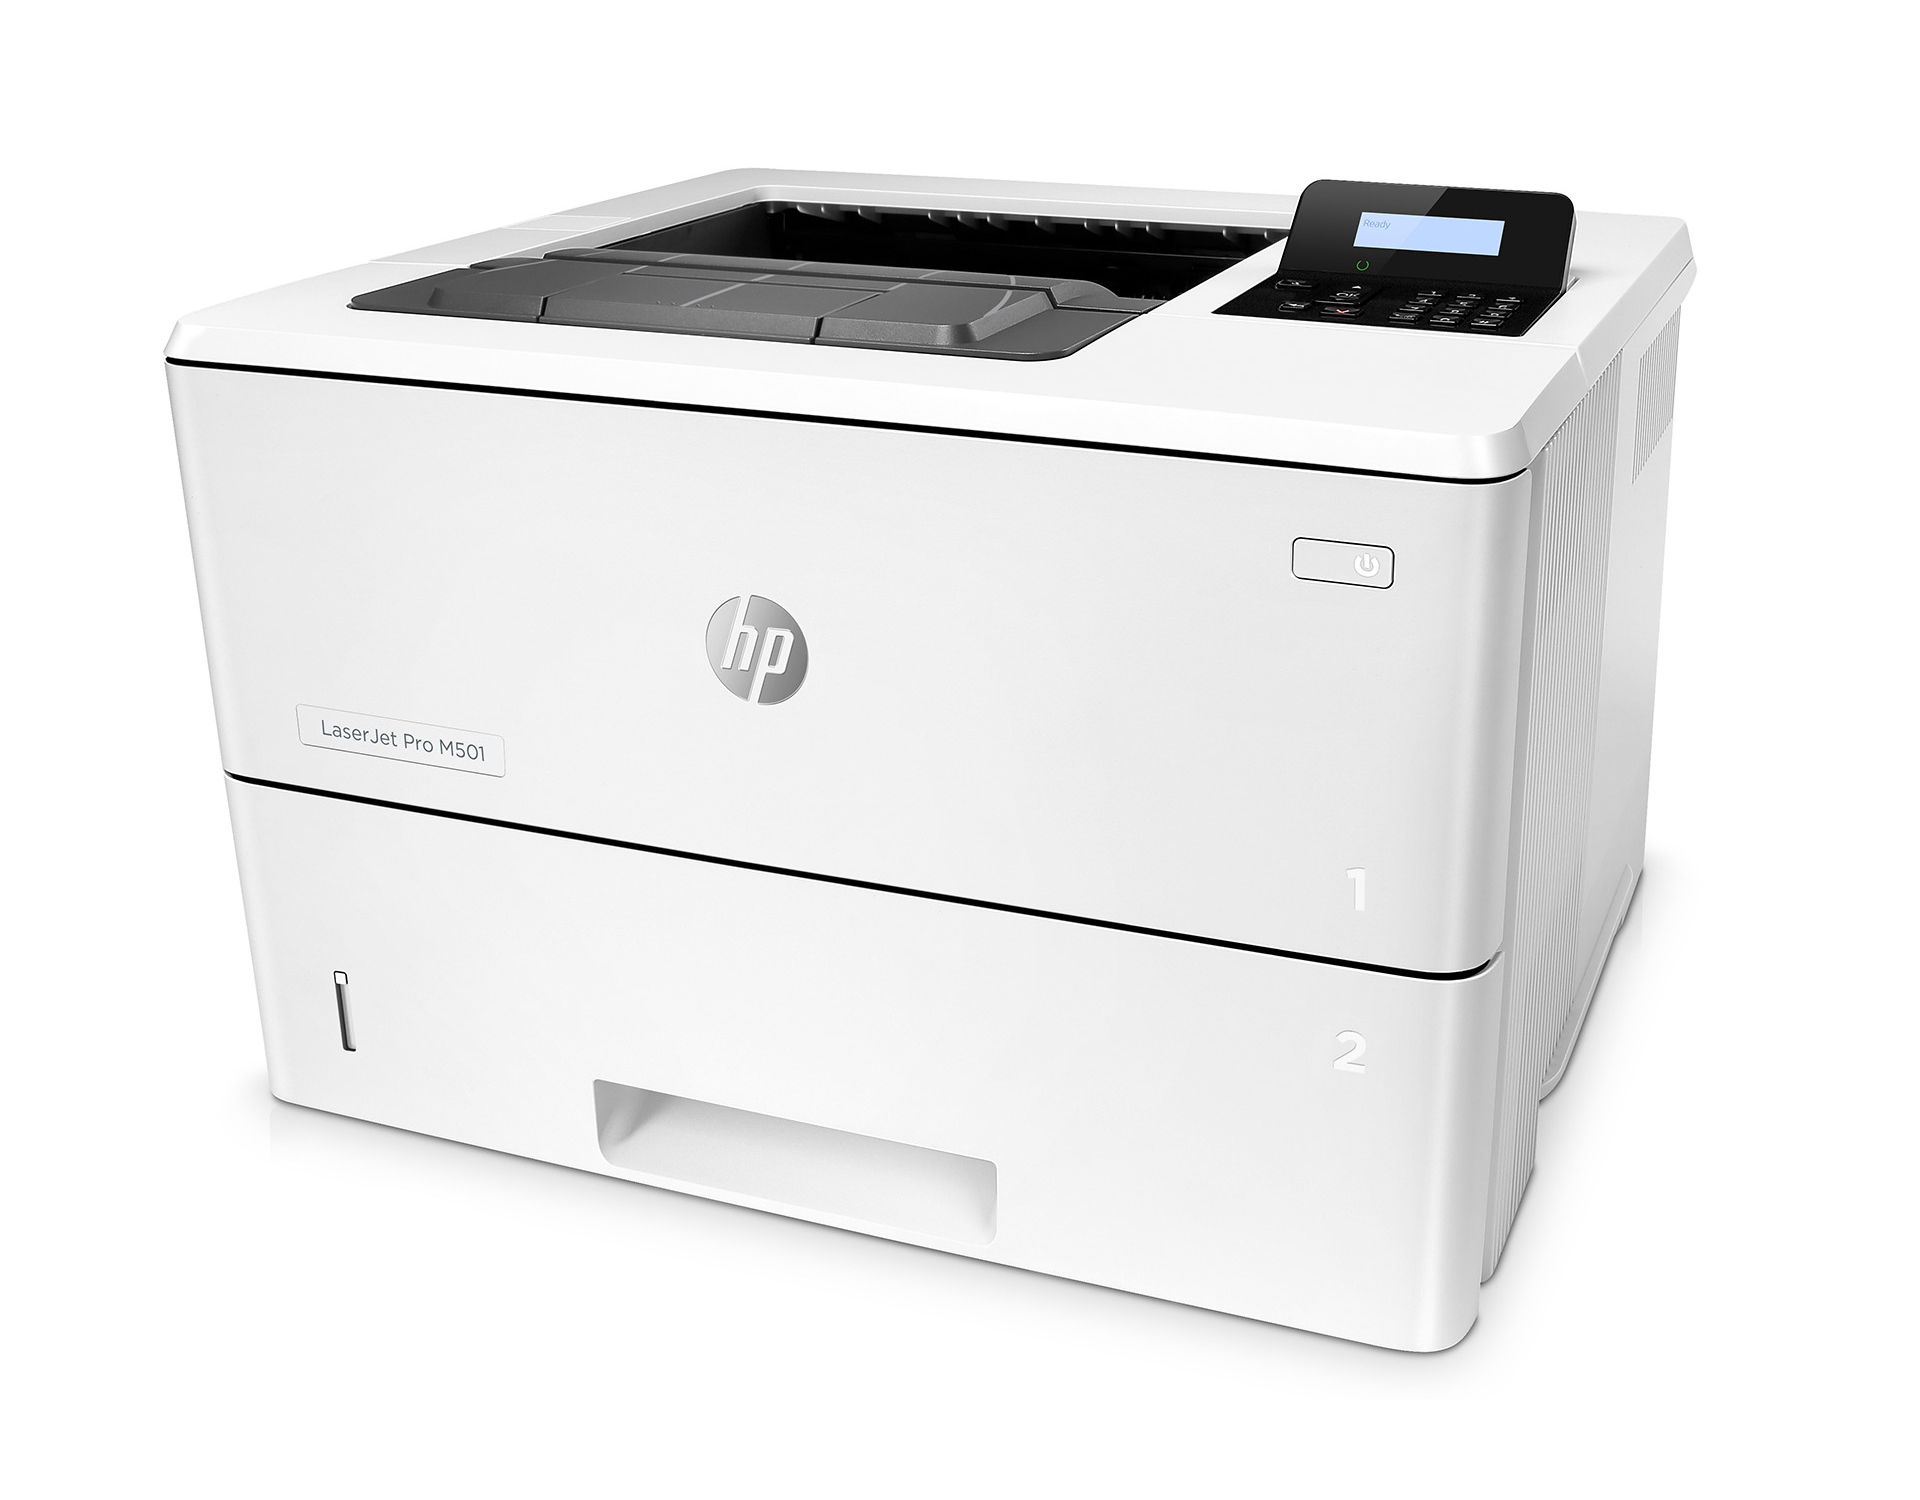 HP LaserJet Pro M501dn Laserdrucker weiß A4, Drucker, LAN, Dplex, HP ePrint, Cloud Print, Airprint, USB, 600 x 600 dpi 